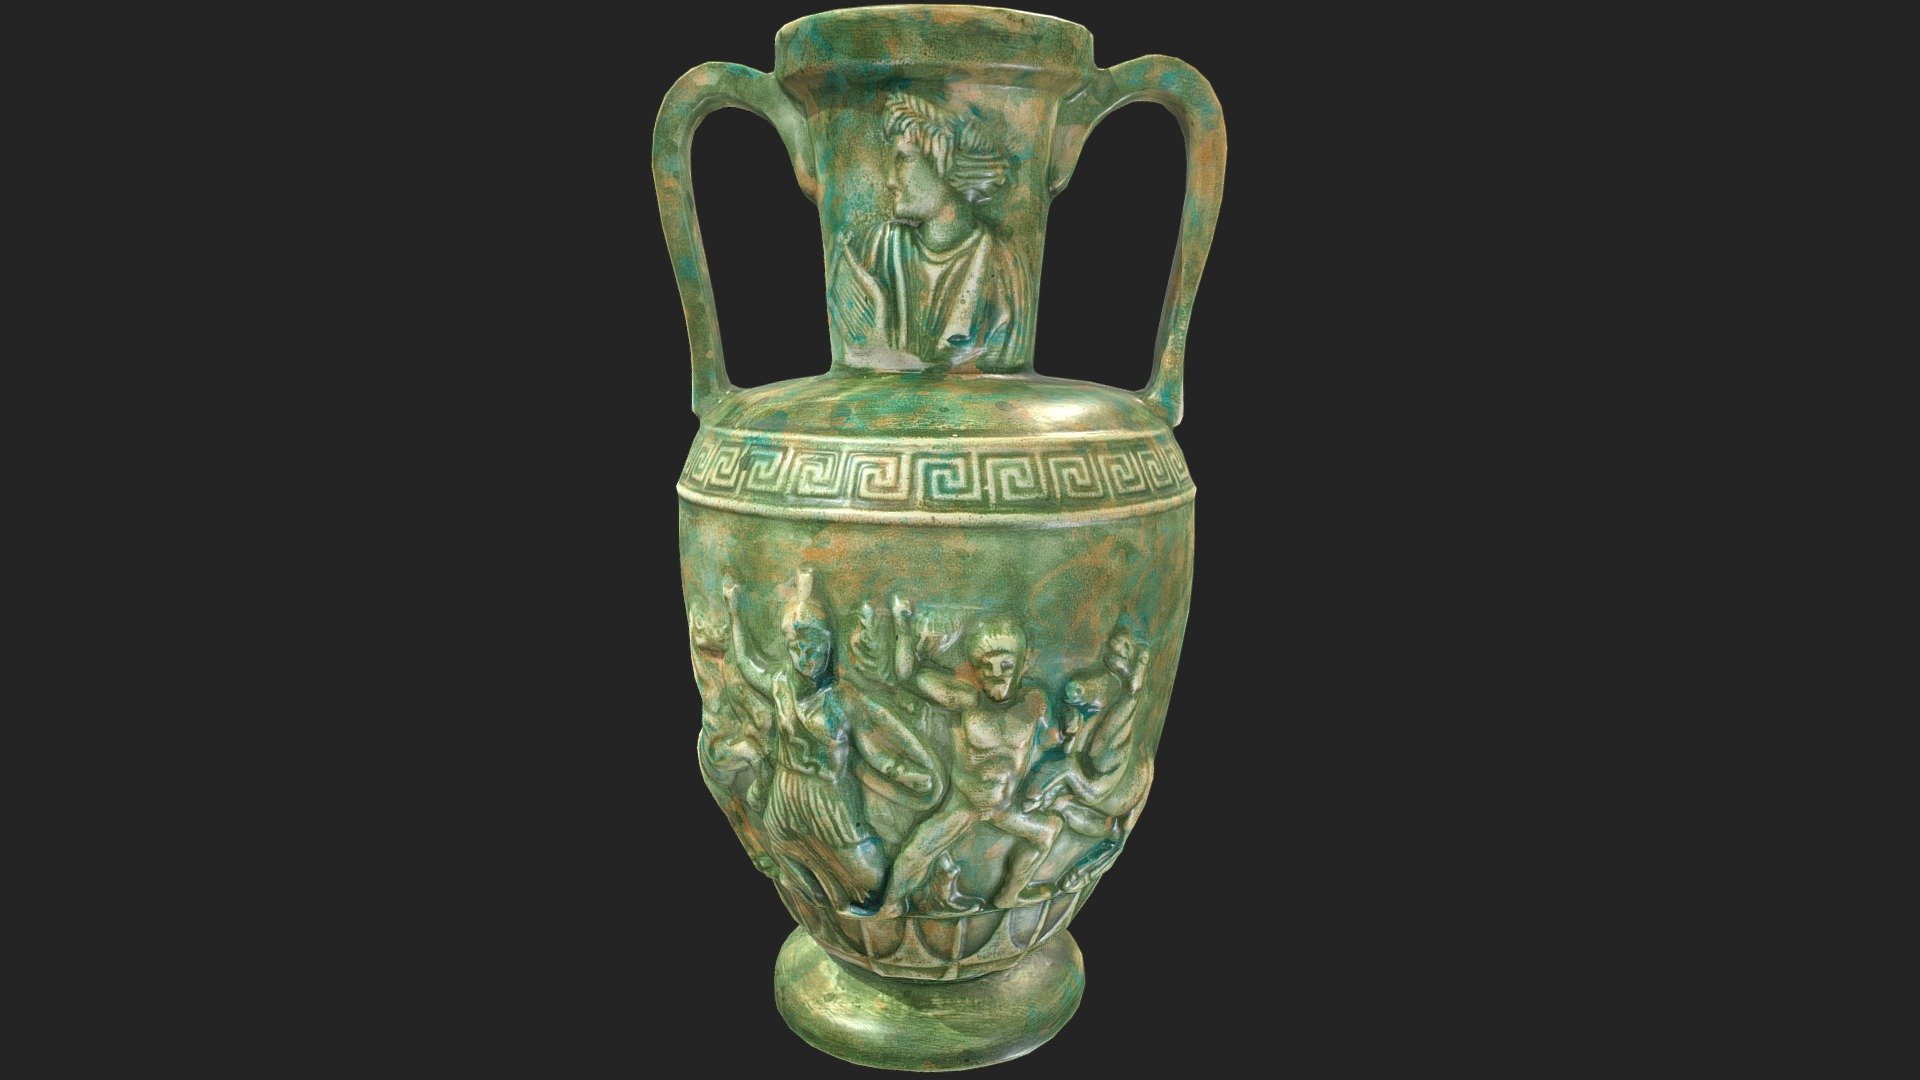 A 3D scan of museum replica originating from anciet greece.

Estimated age: 400 b.c - Ancient Greece, Pot/Vase 3D scan - 3D model by Svardz 3d model